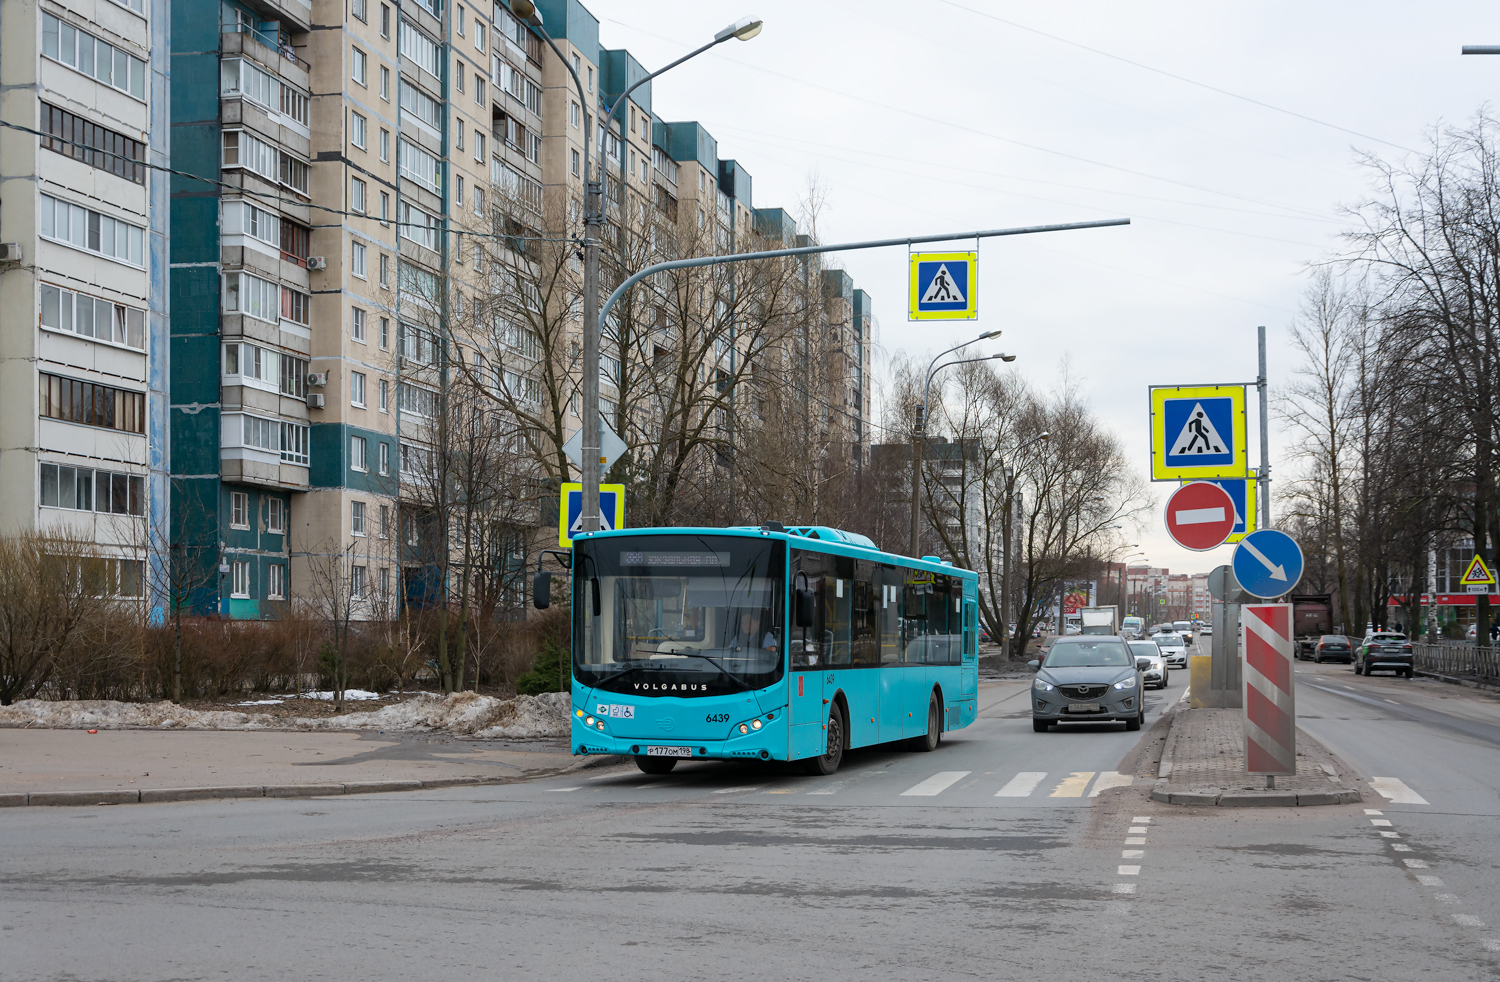 Saint Petersburg, Volgabus-5270.G2 (LNG) # 6439